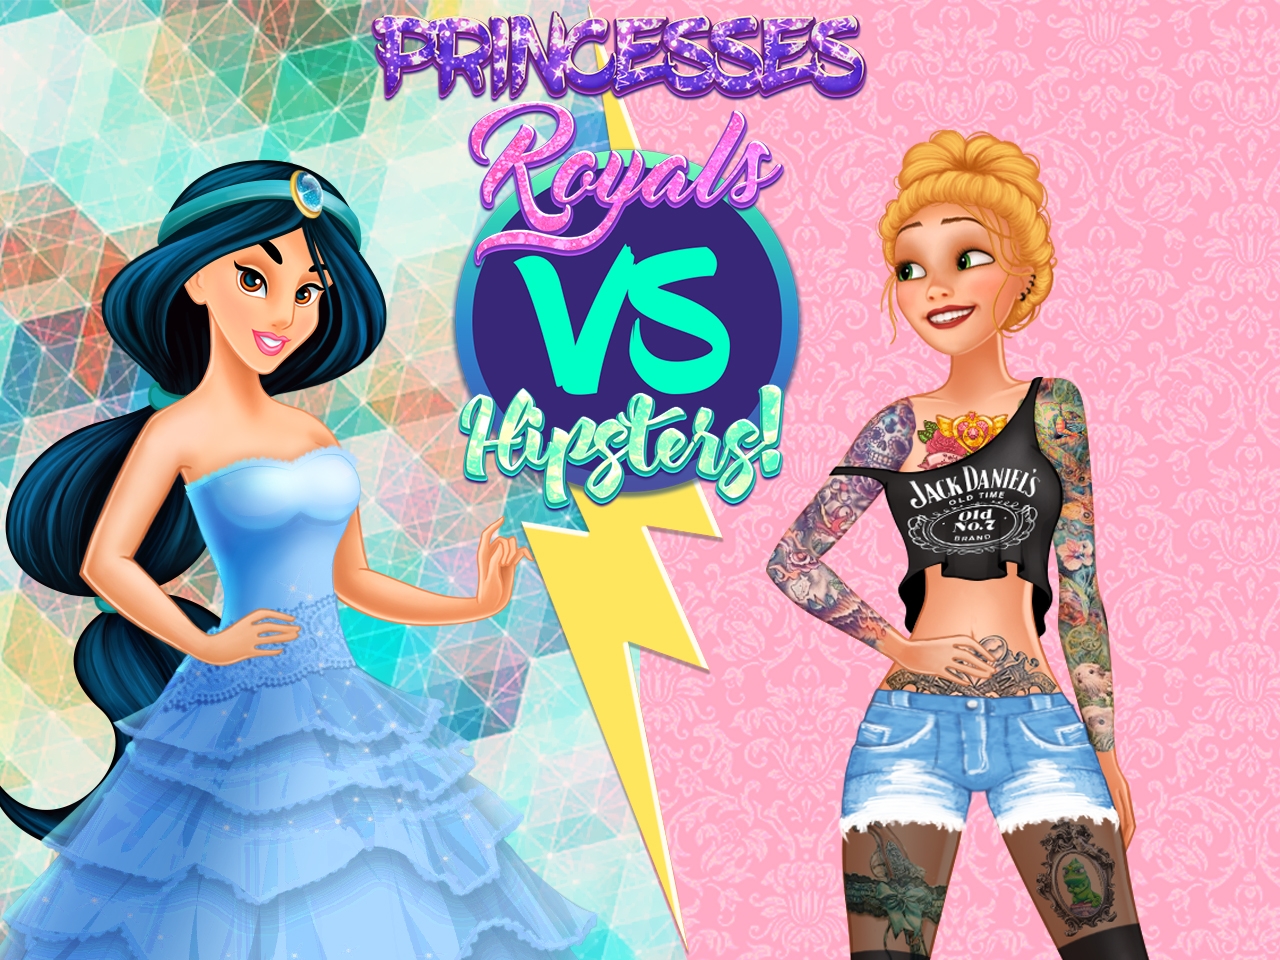 Online igrica Royals vs Hipsters